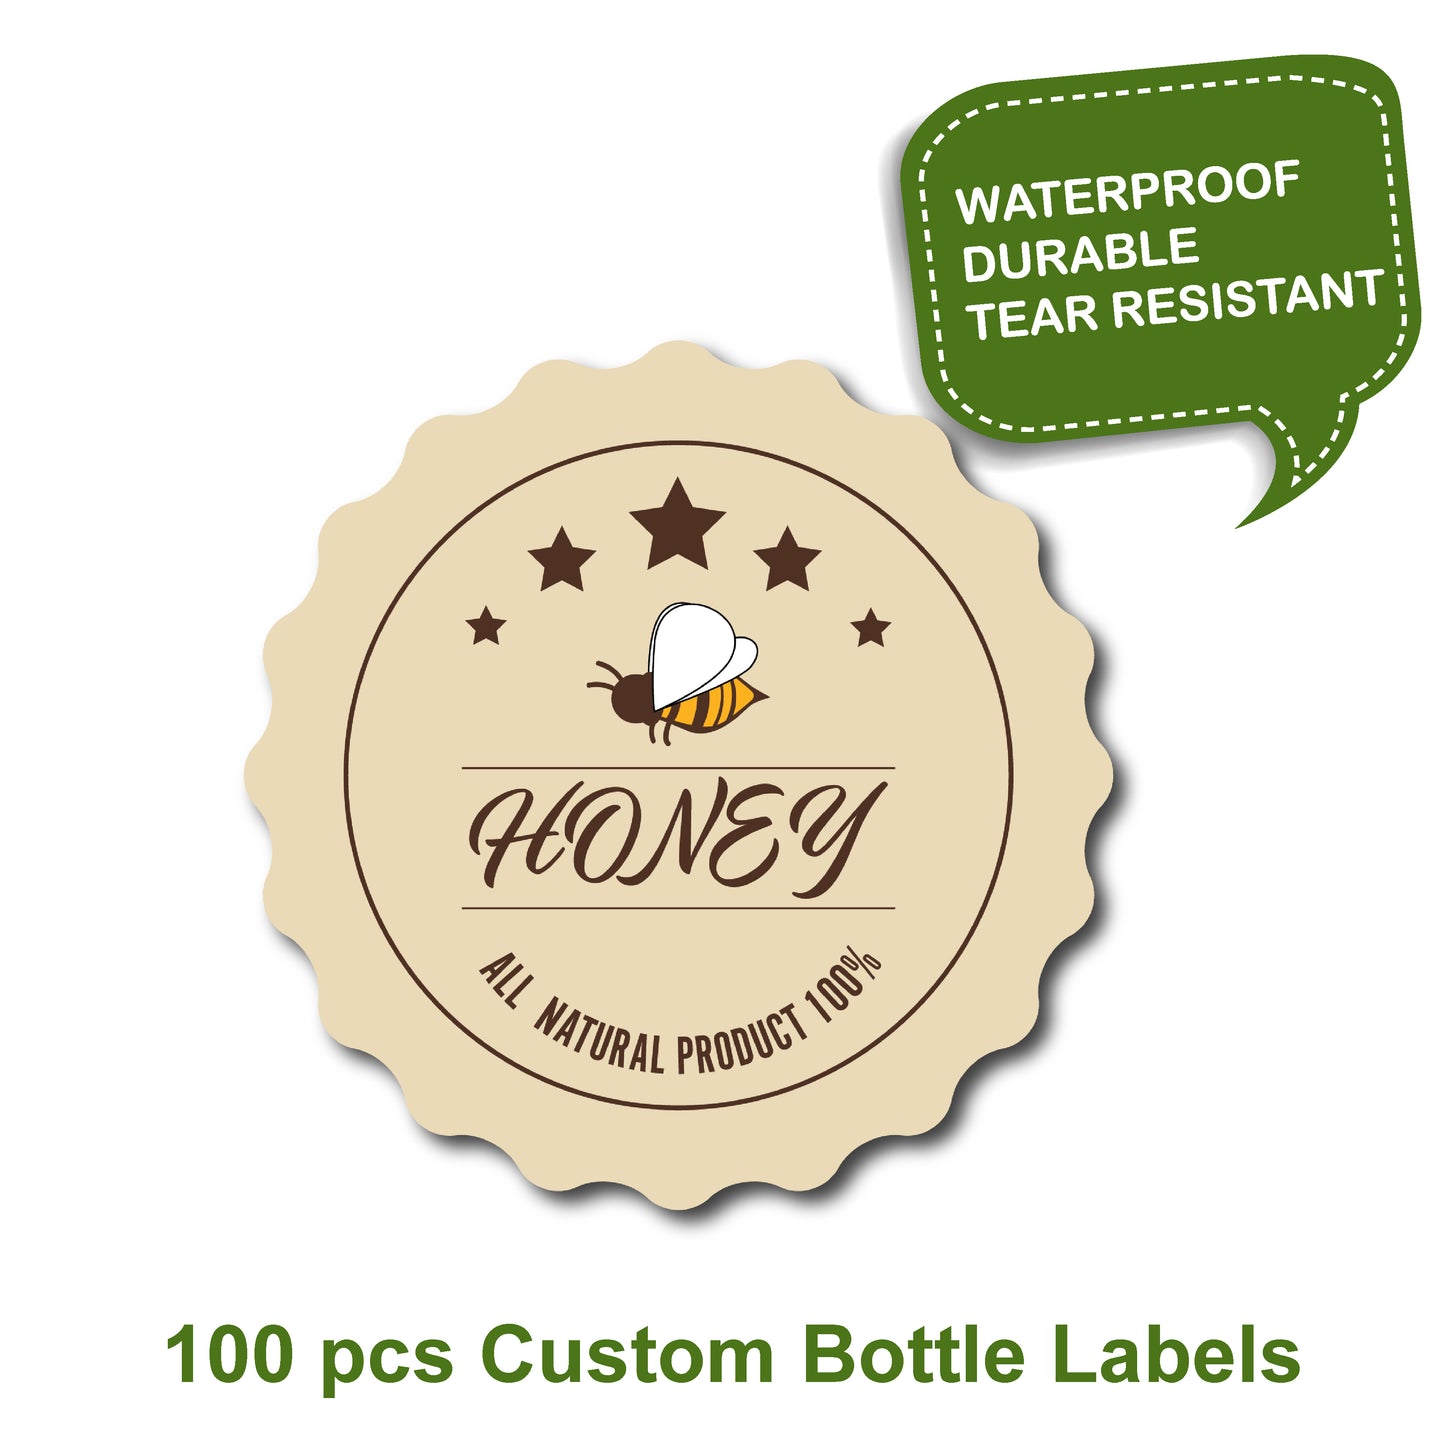 Custom honey all natural product label, 100 pcs Custom bottle labels, custom maple syrup label, custom label, custom candle label, custom product label, labels